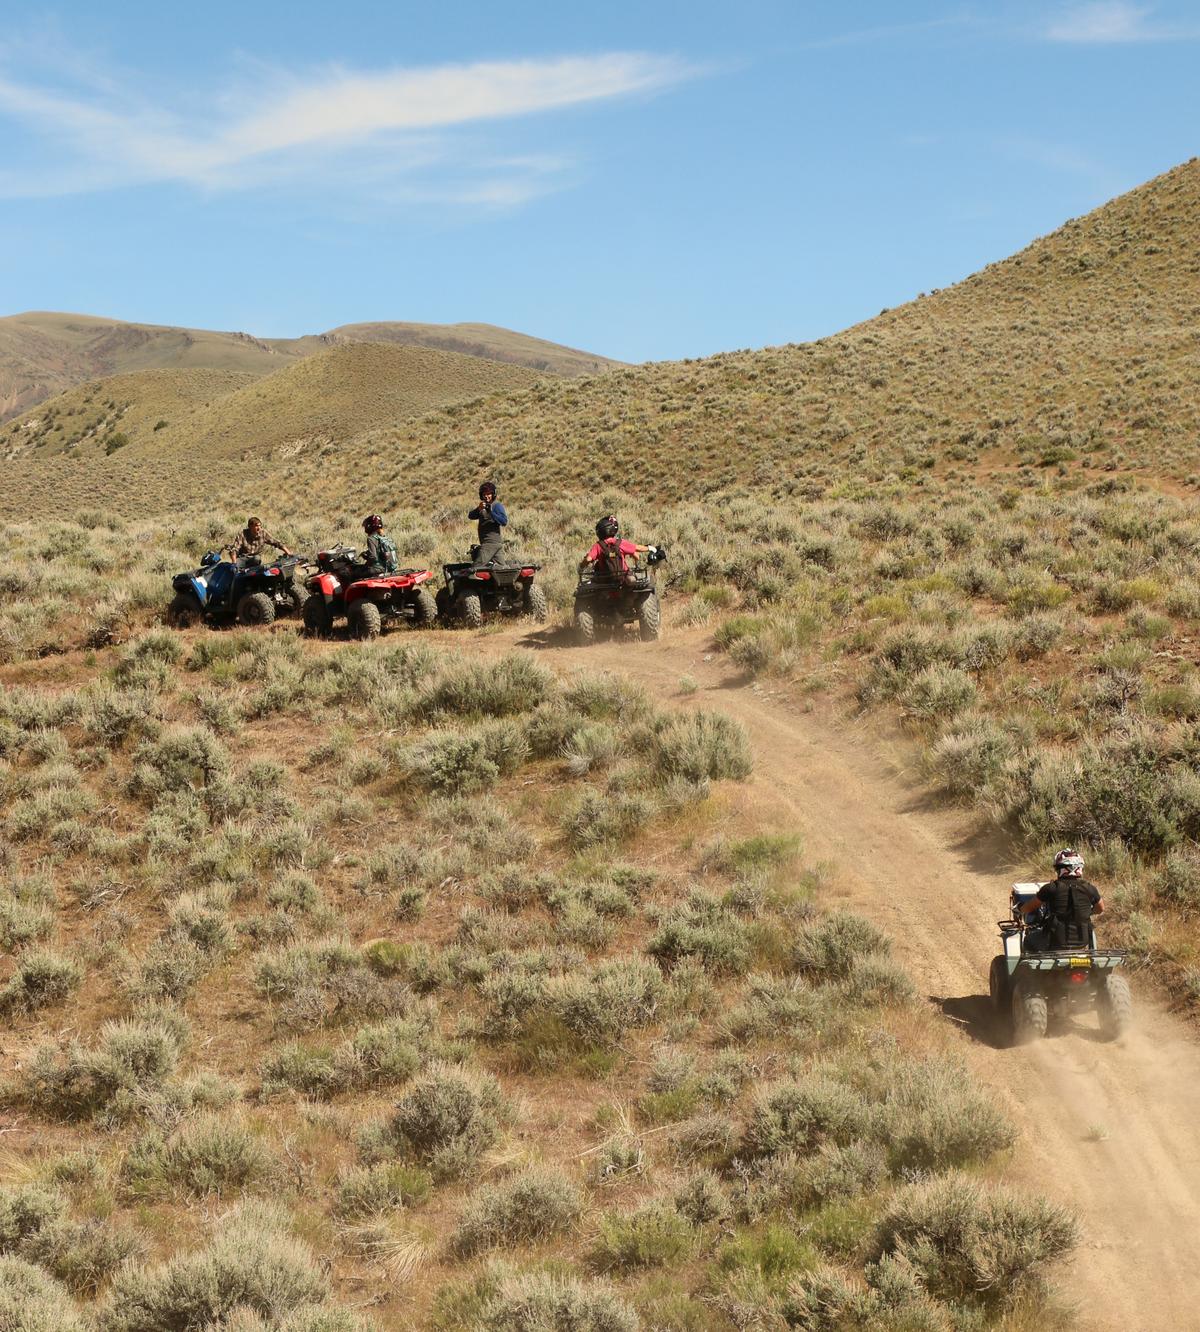 ATV Riding near Battle Mountain. Photo credit: Larry Burton/Travel Nevada